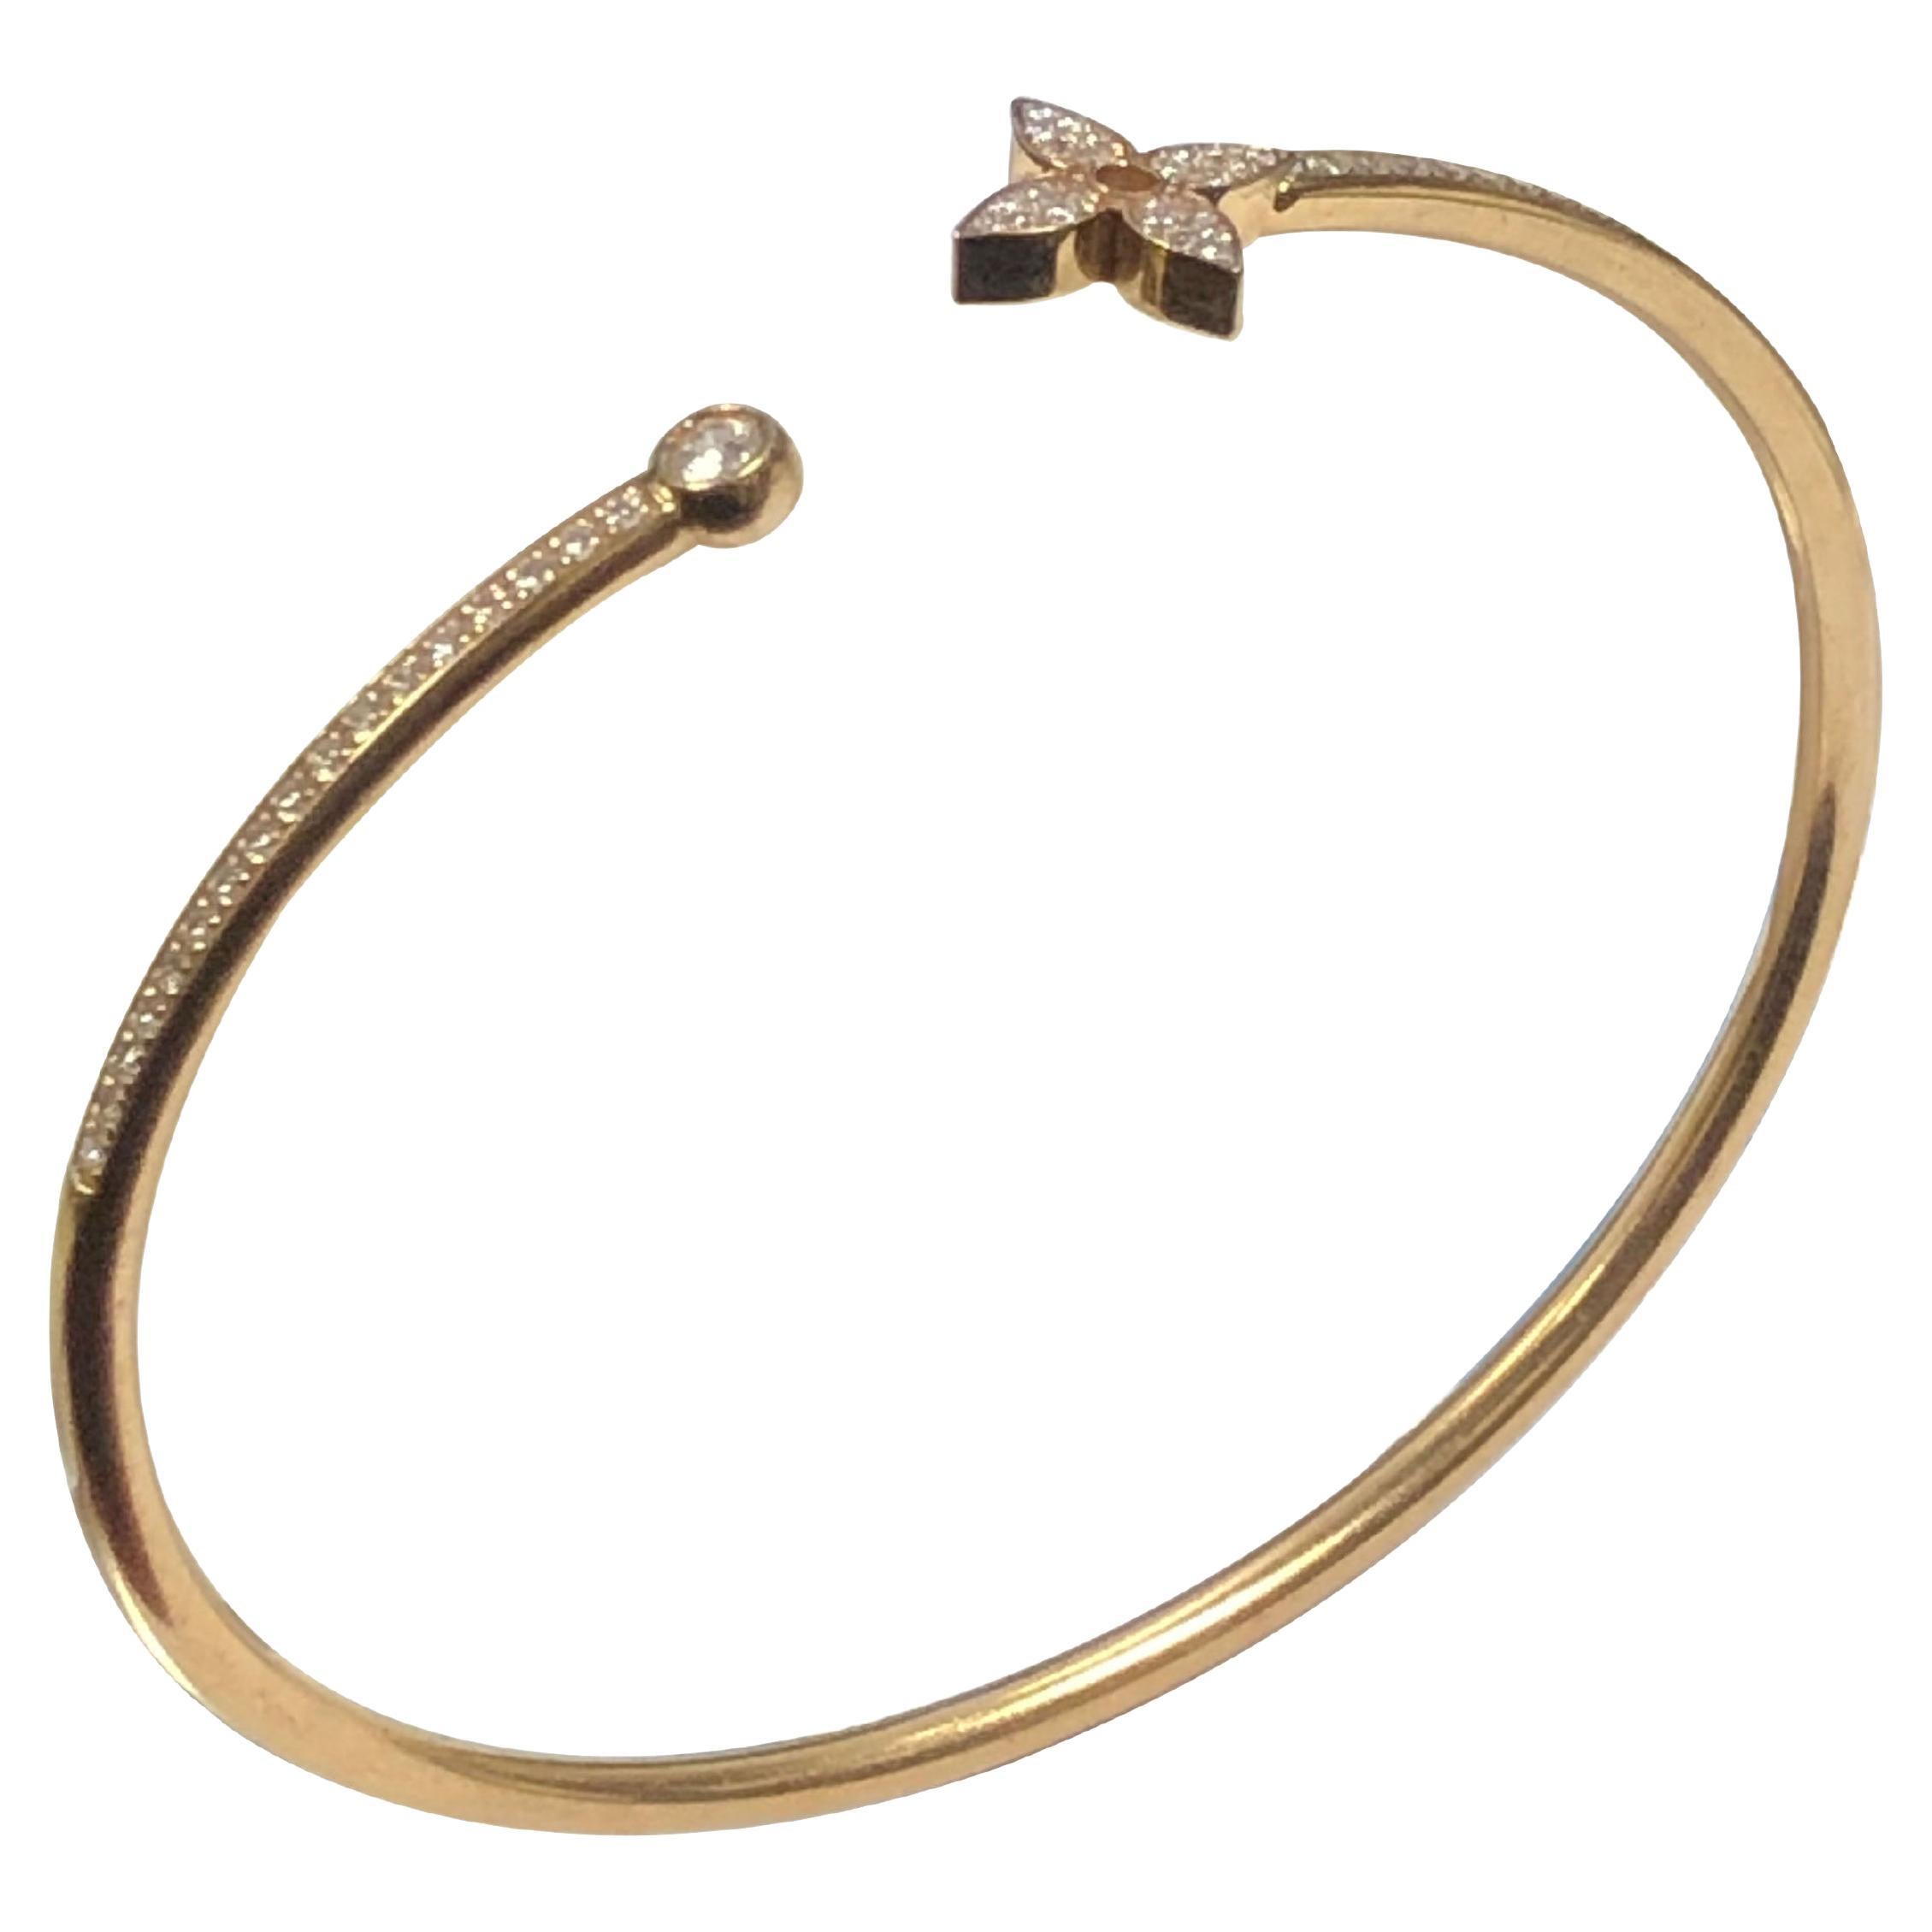 Louis Vuitton Idylle Blossom Twist Bracelet, Yellow Gold and Diamonds Gold. Size S